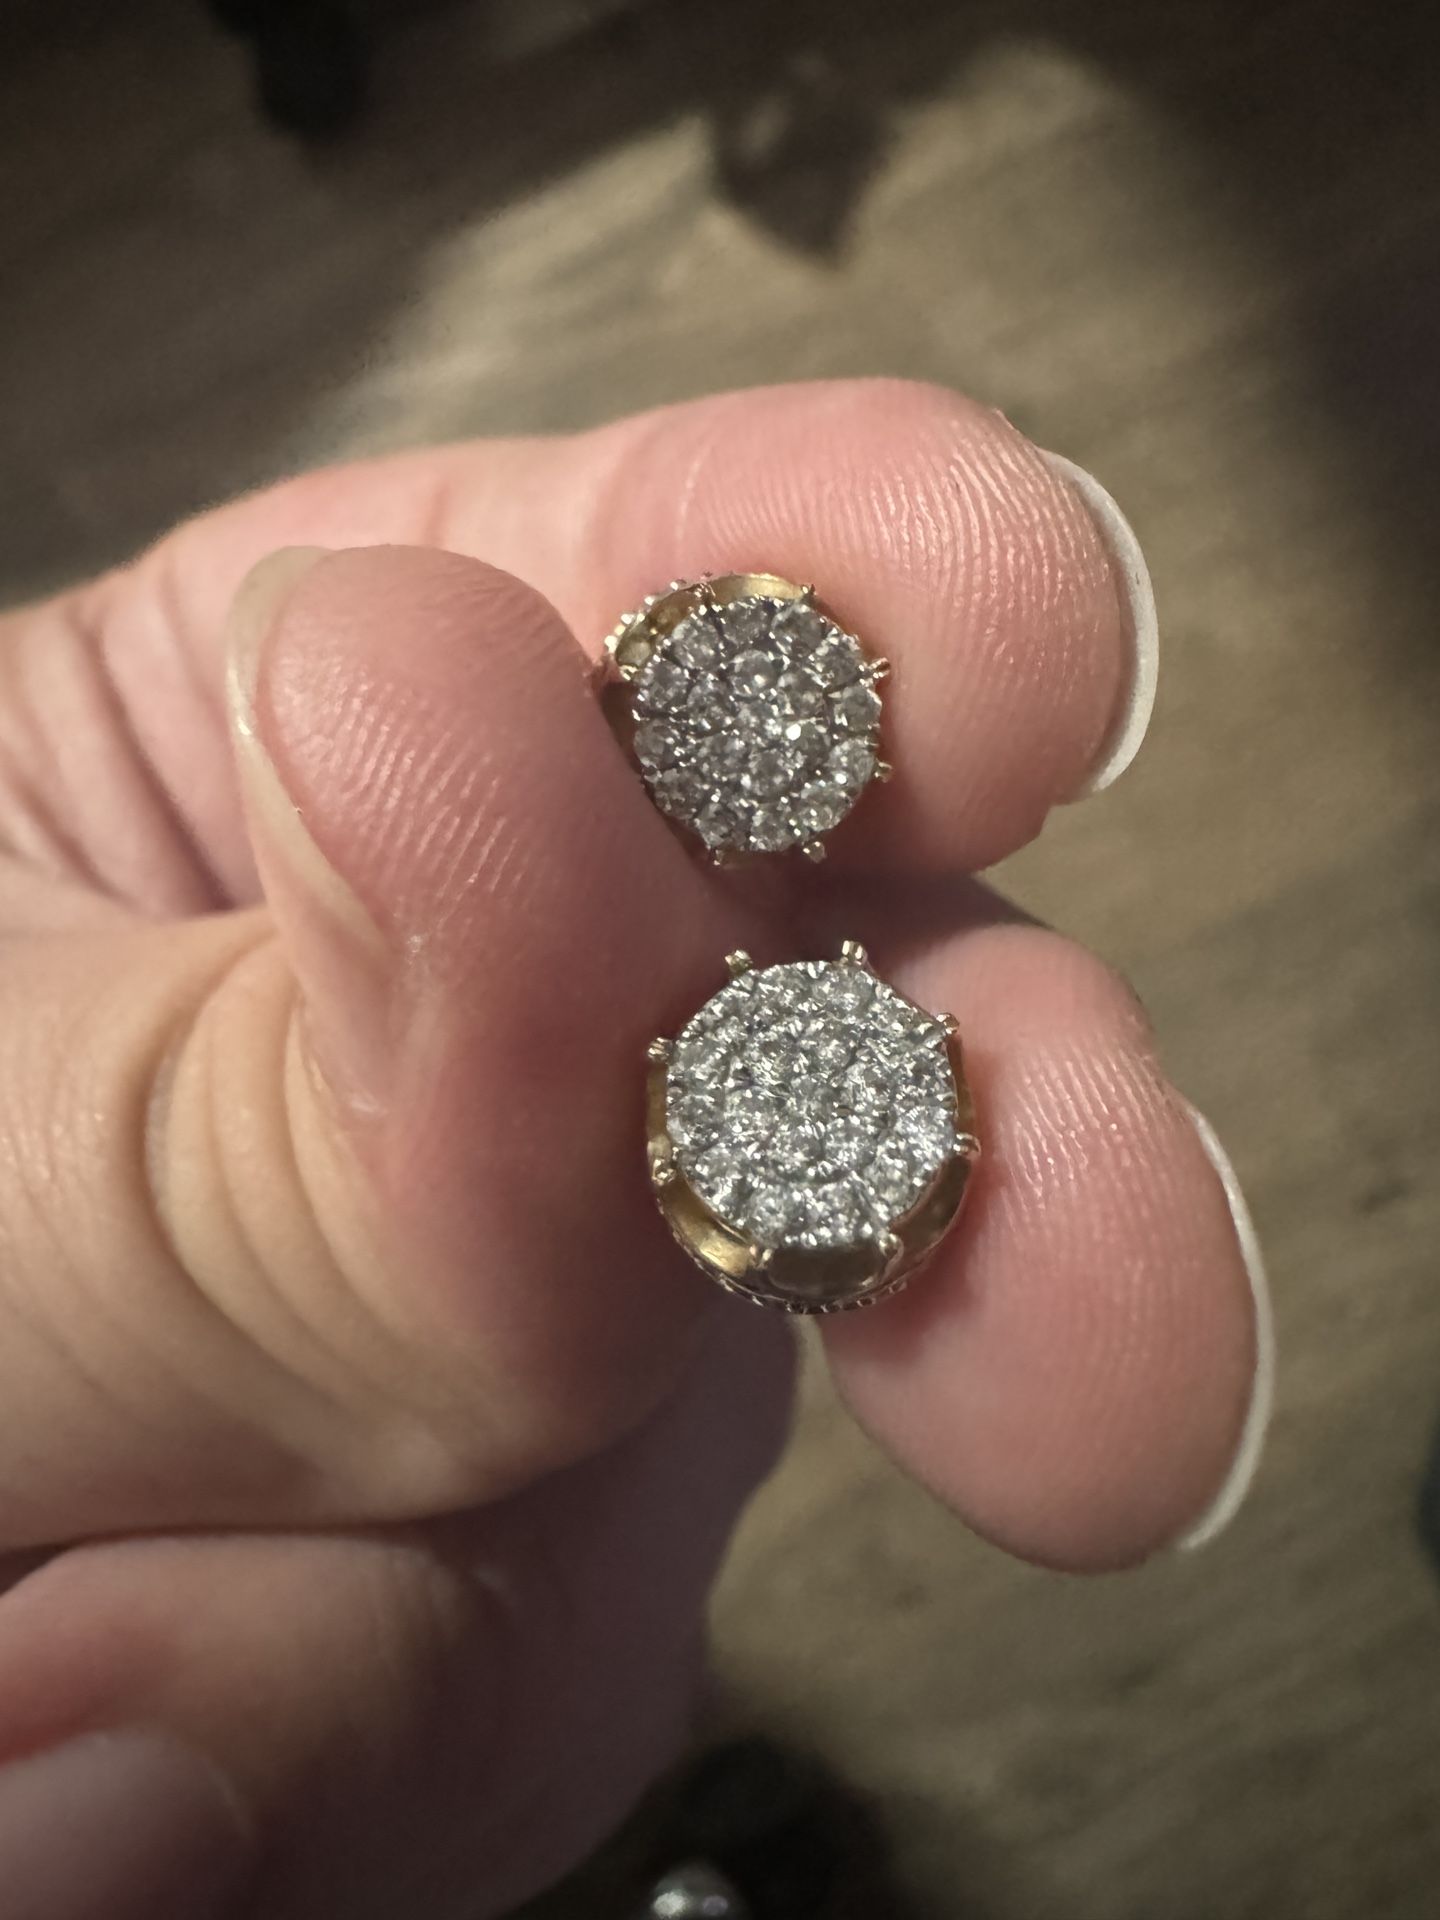 Men's Diamond Earrings 1/2 ct tw 10K Yellow Gold